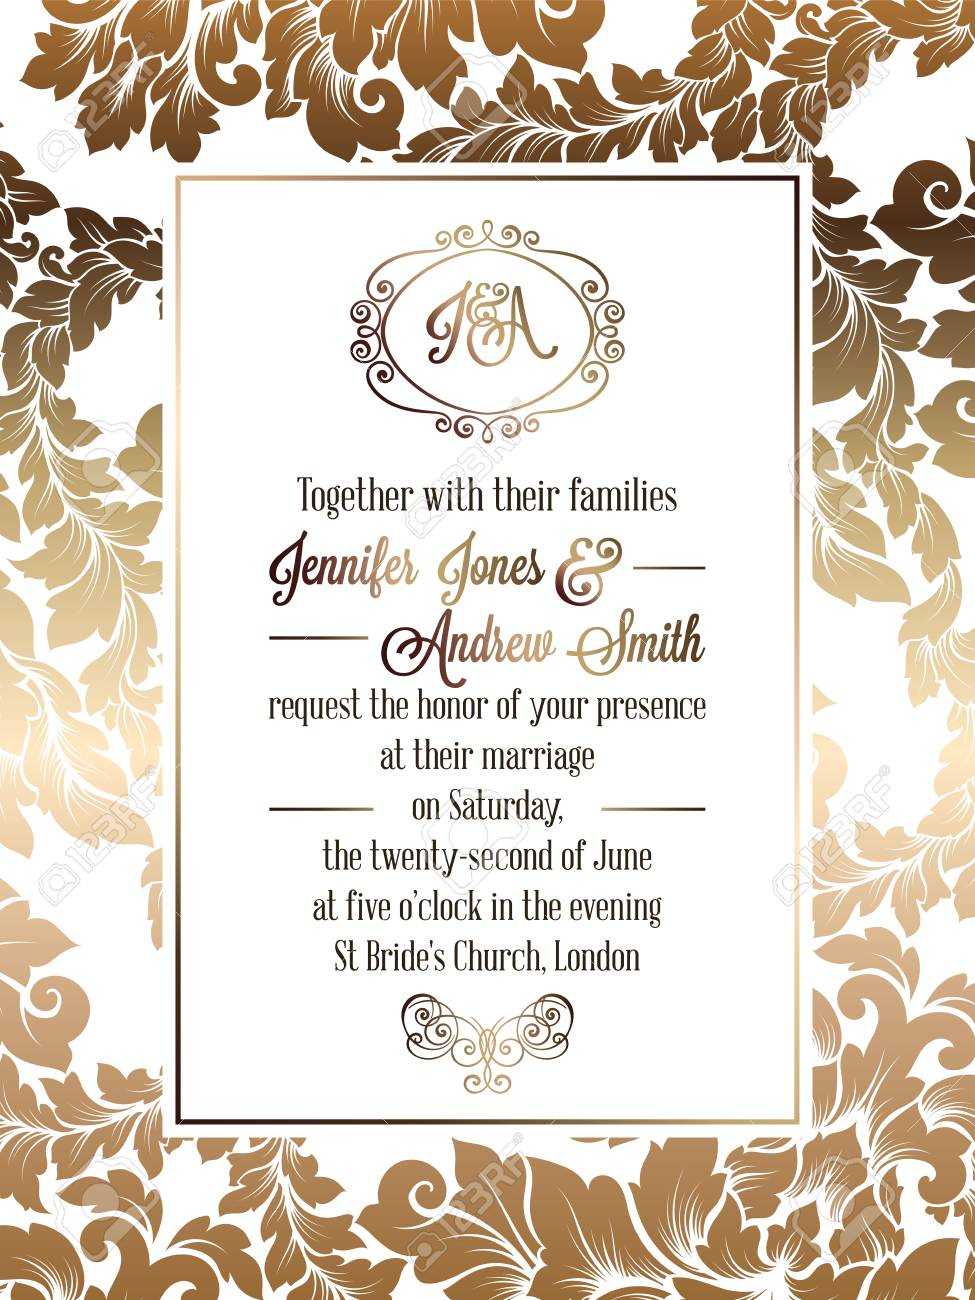 Vintage Baroque Style Wedding Invitation Card Template.. Elegant.. Pertaining To Church Wedding Invitation Card Template